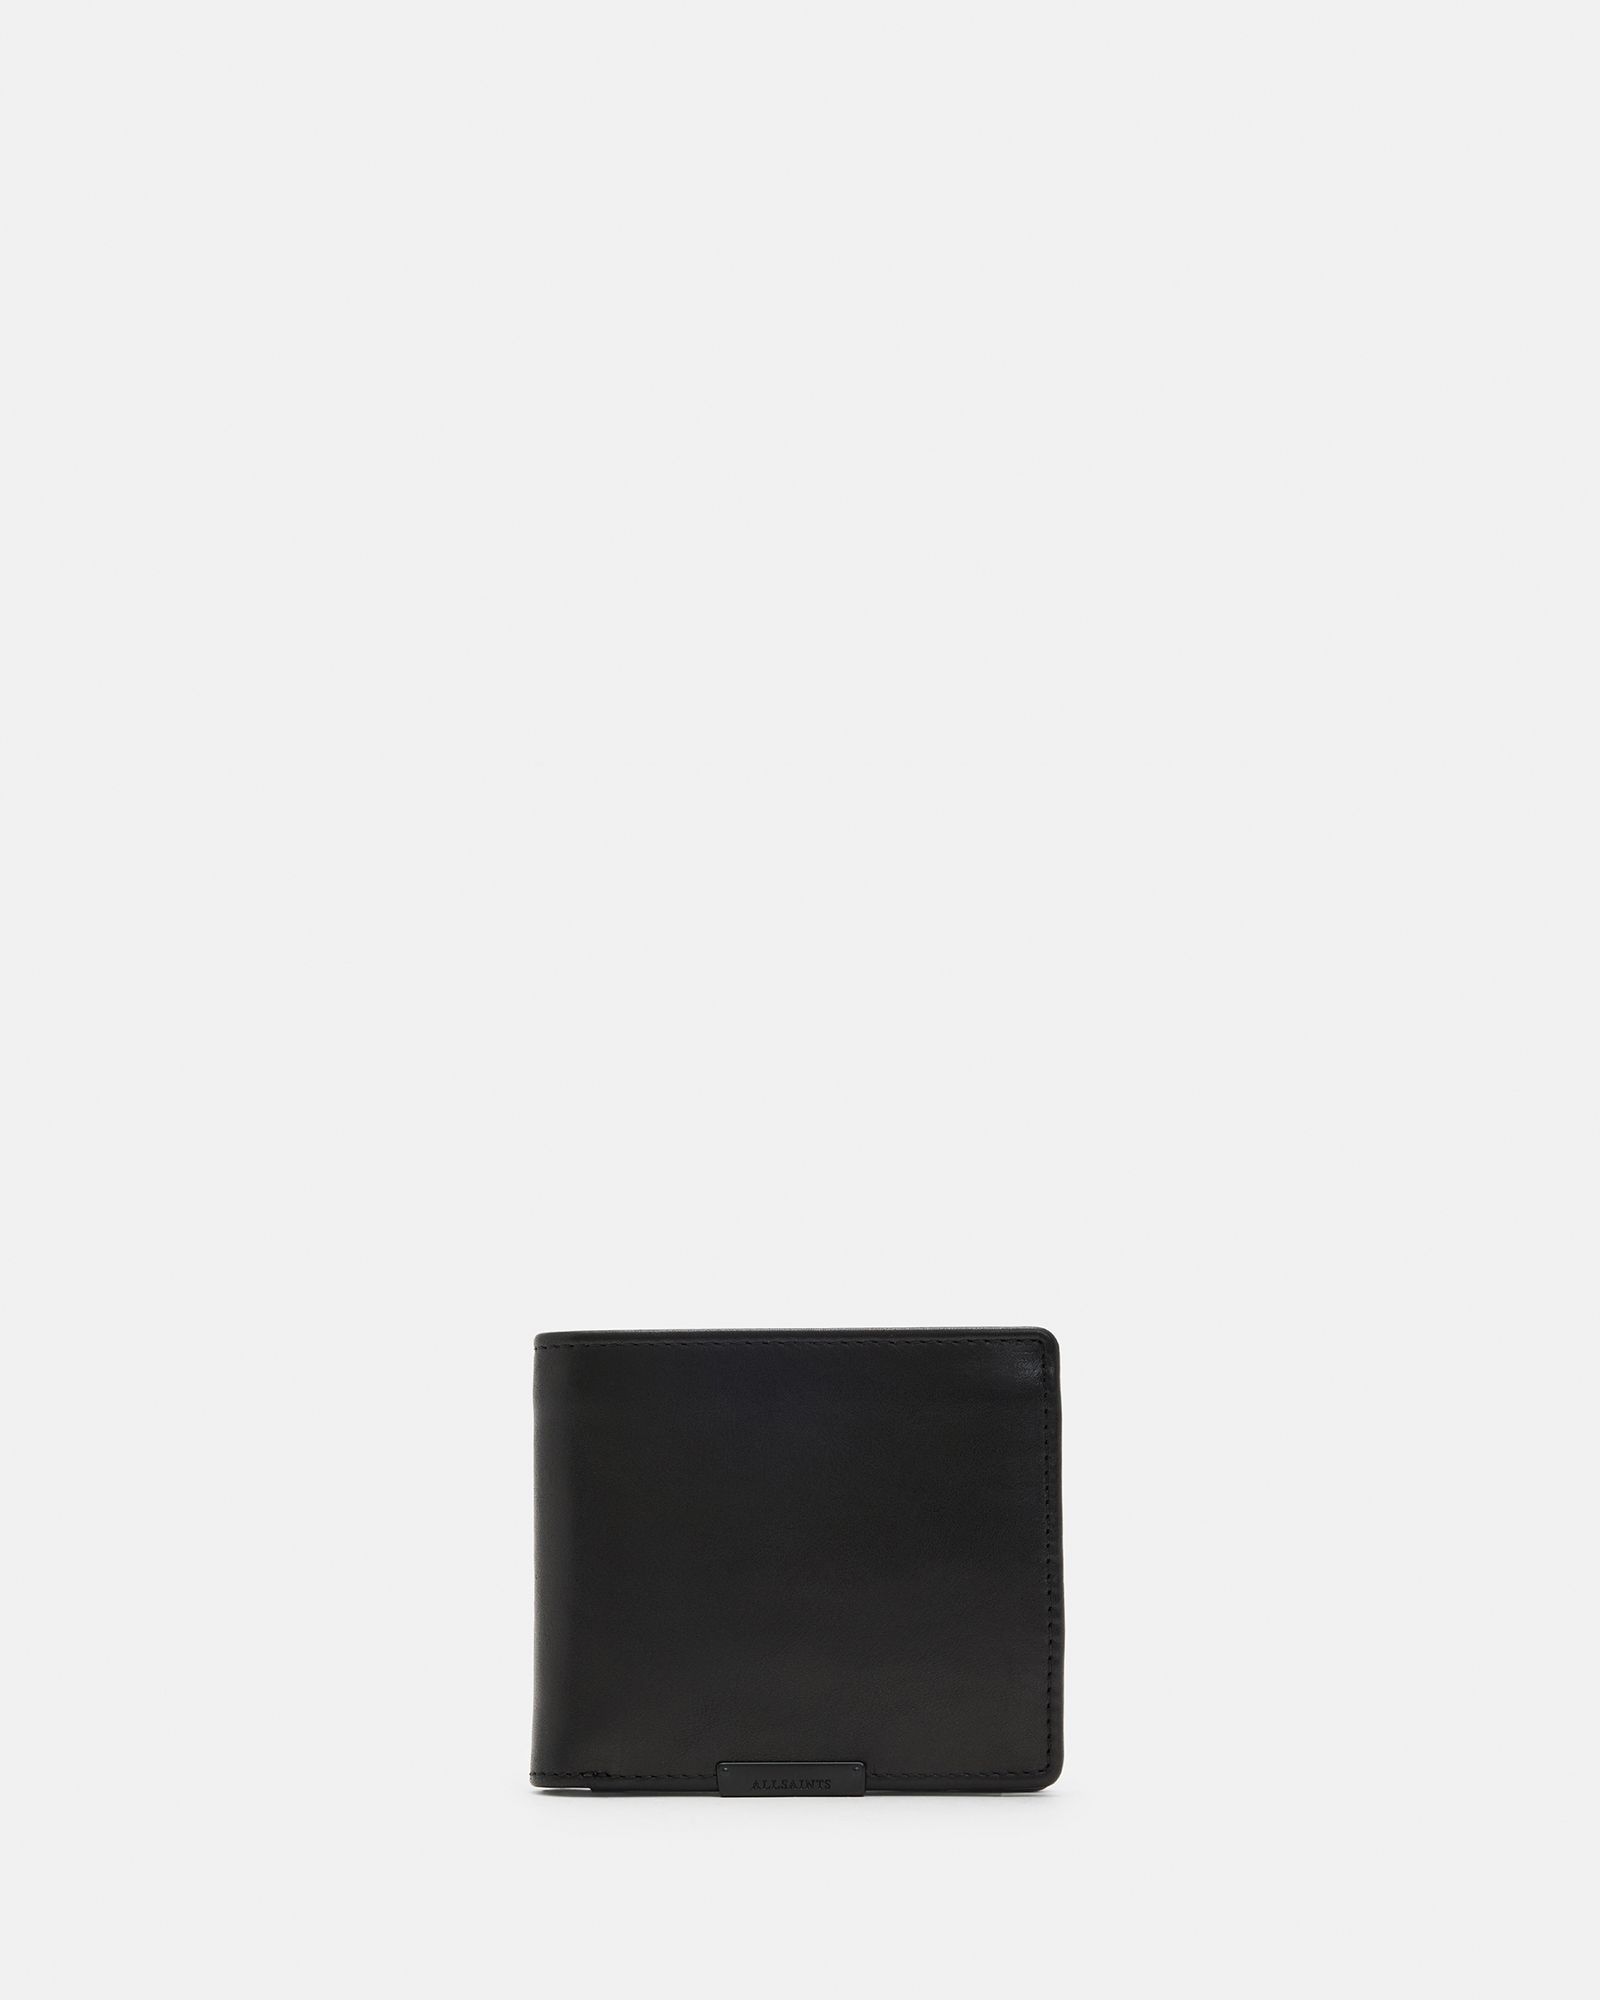 Blyth Leather Wallet Black | ALLSAINTS US | AllSaints US